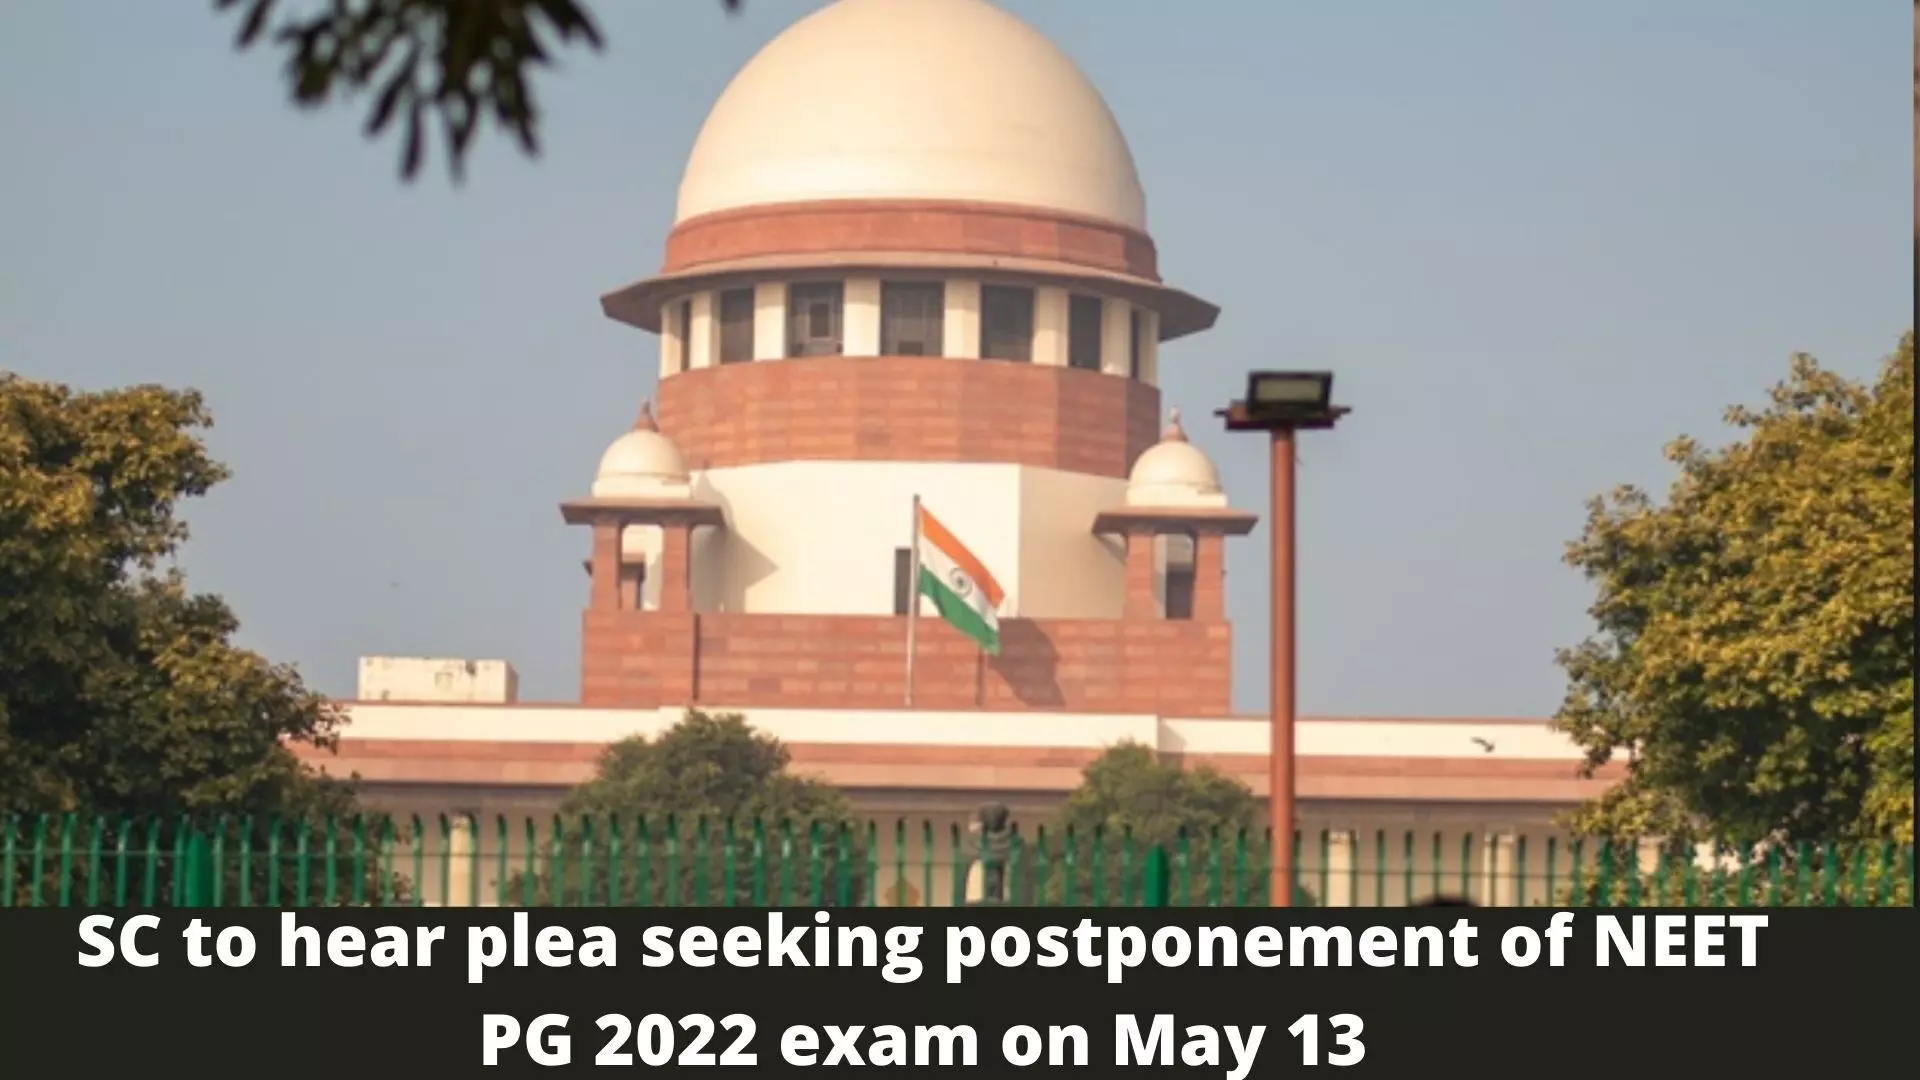 SC to hear plea seeking postponement of NEET PG 2022 exam on May 13